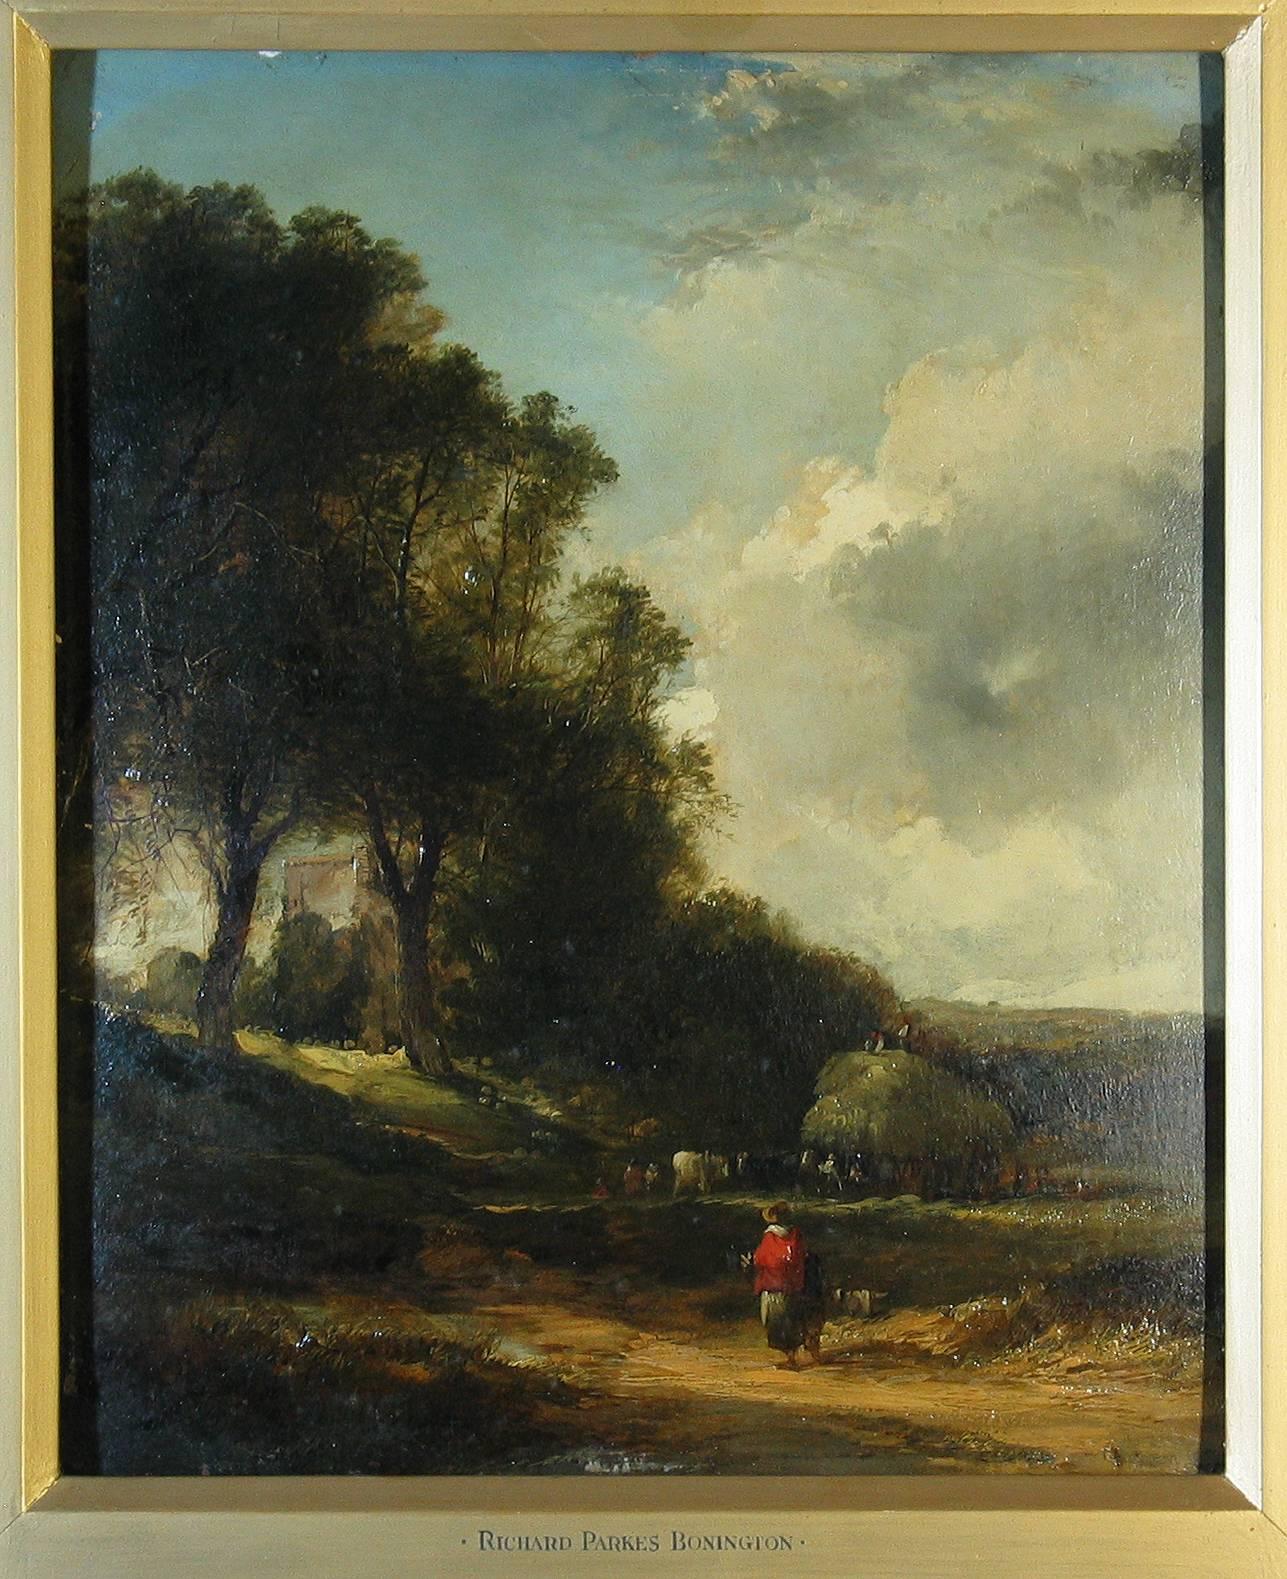 Attributed to Richard Parkes Bonington, Oil on Millboard, Landscape 1